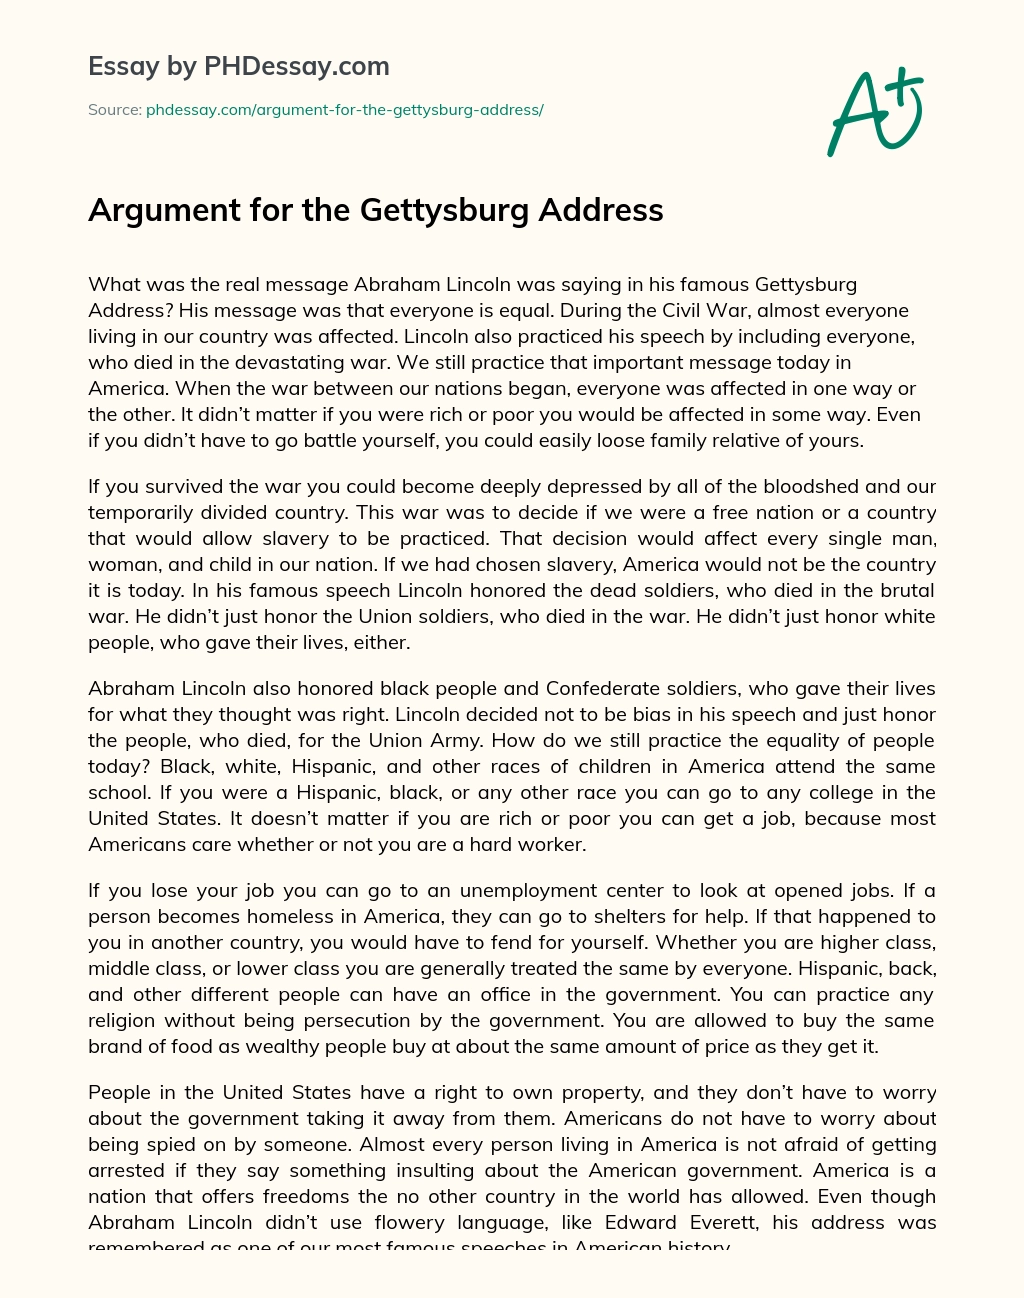 Argument for the Gettysburg Address essay